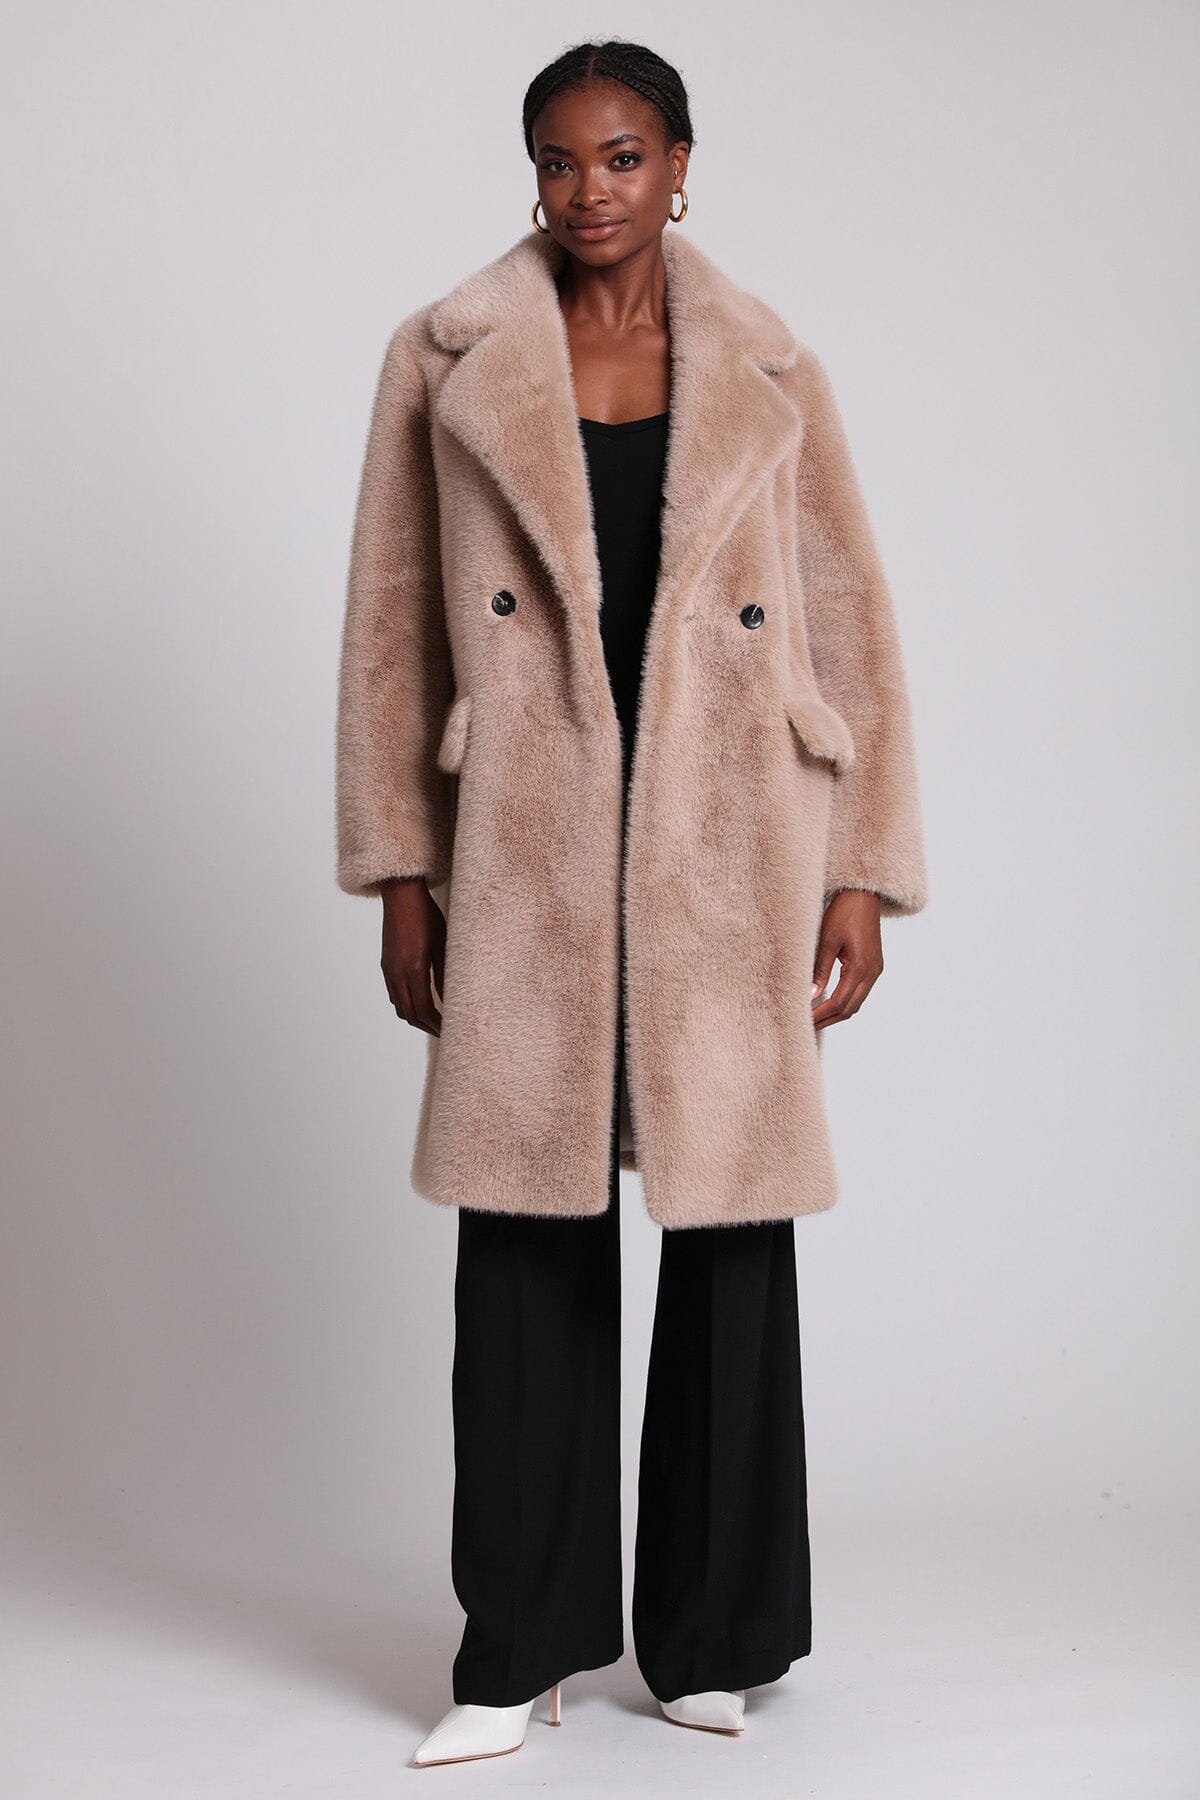 Beige double breasted faux mink fur coat jacket - figure flattering luxurious coats outerwear for ladies by Bagatelle